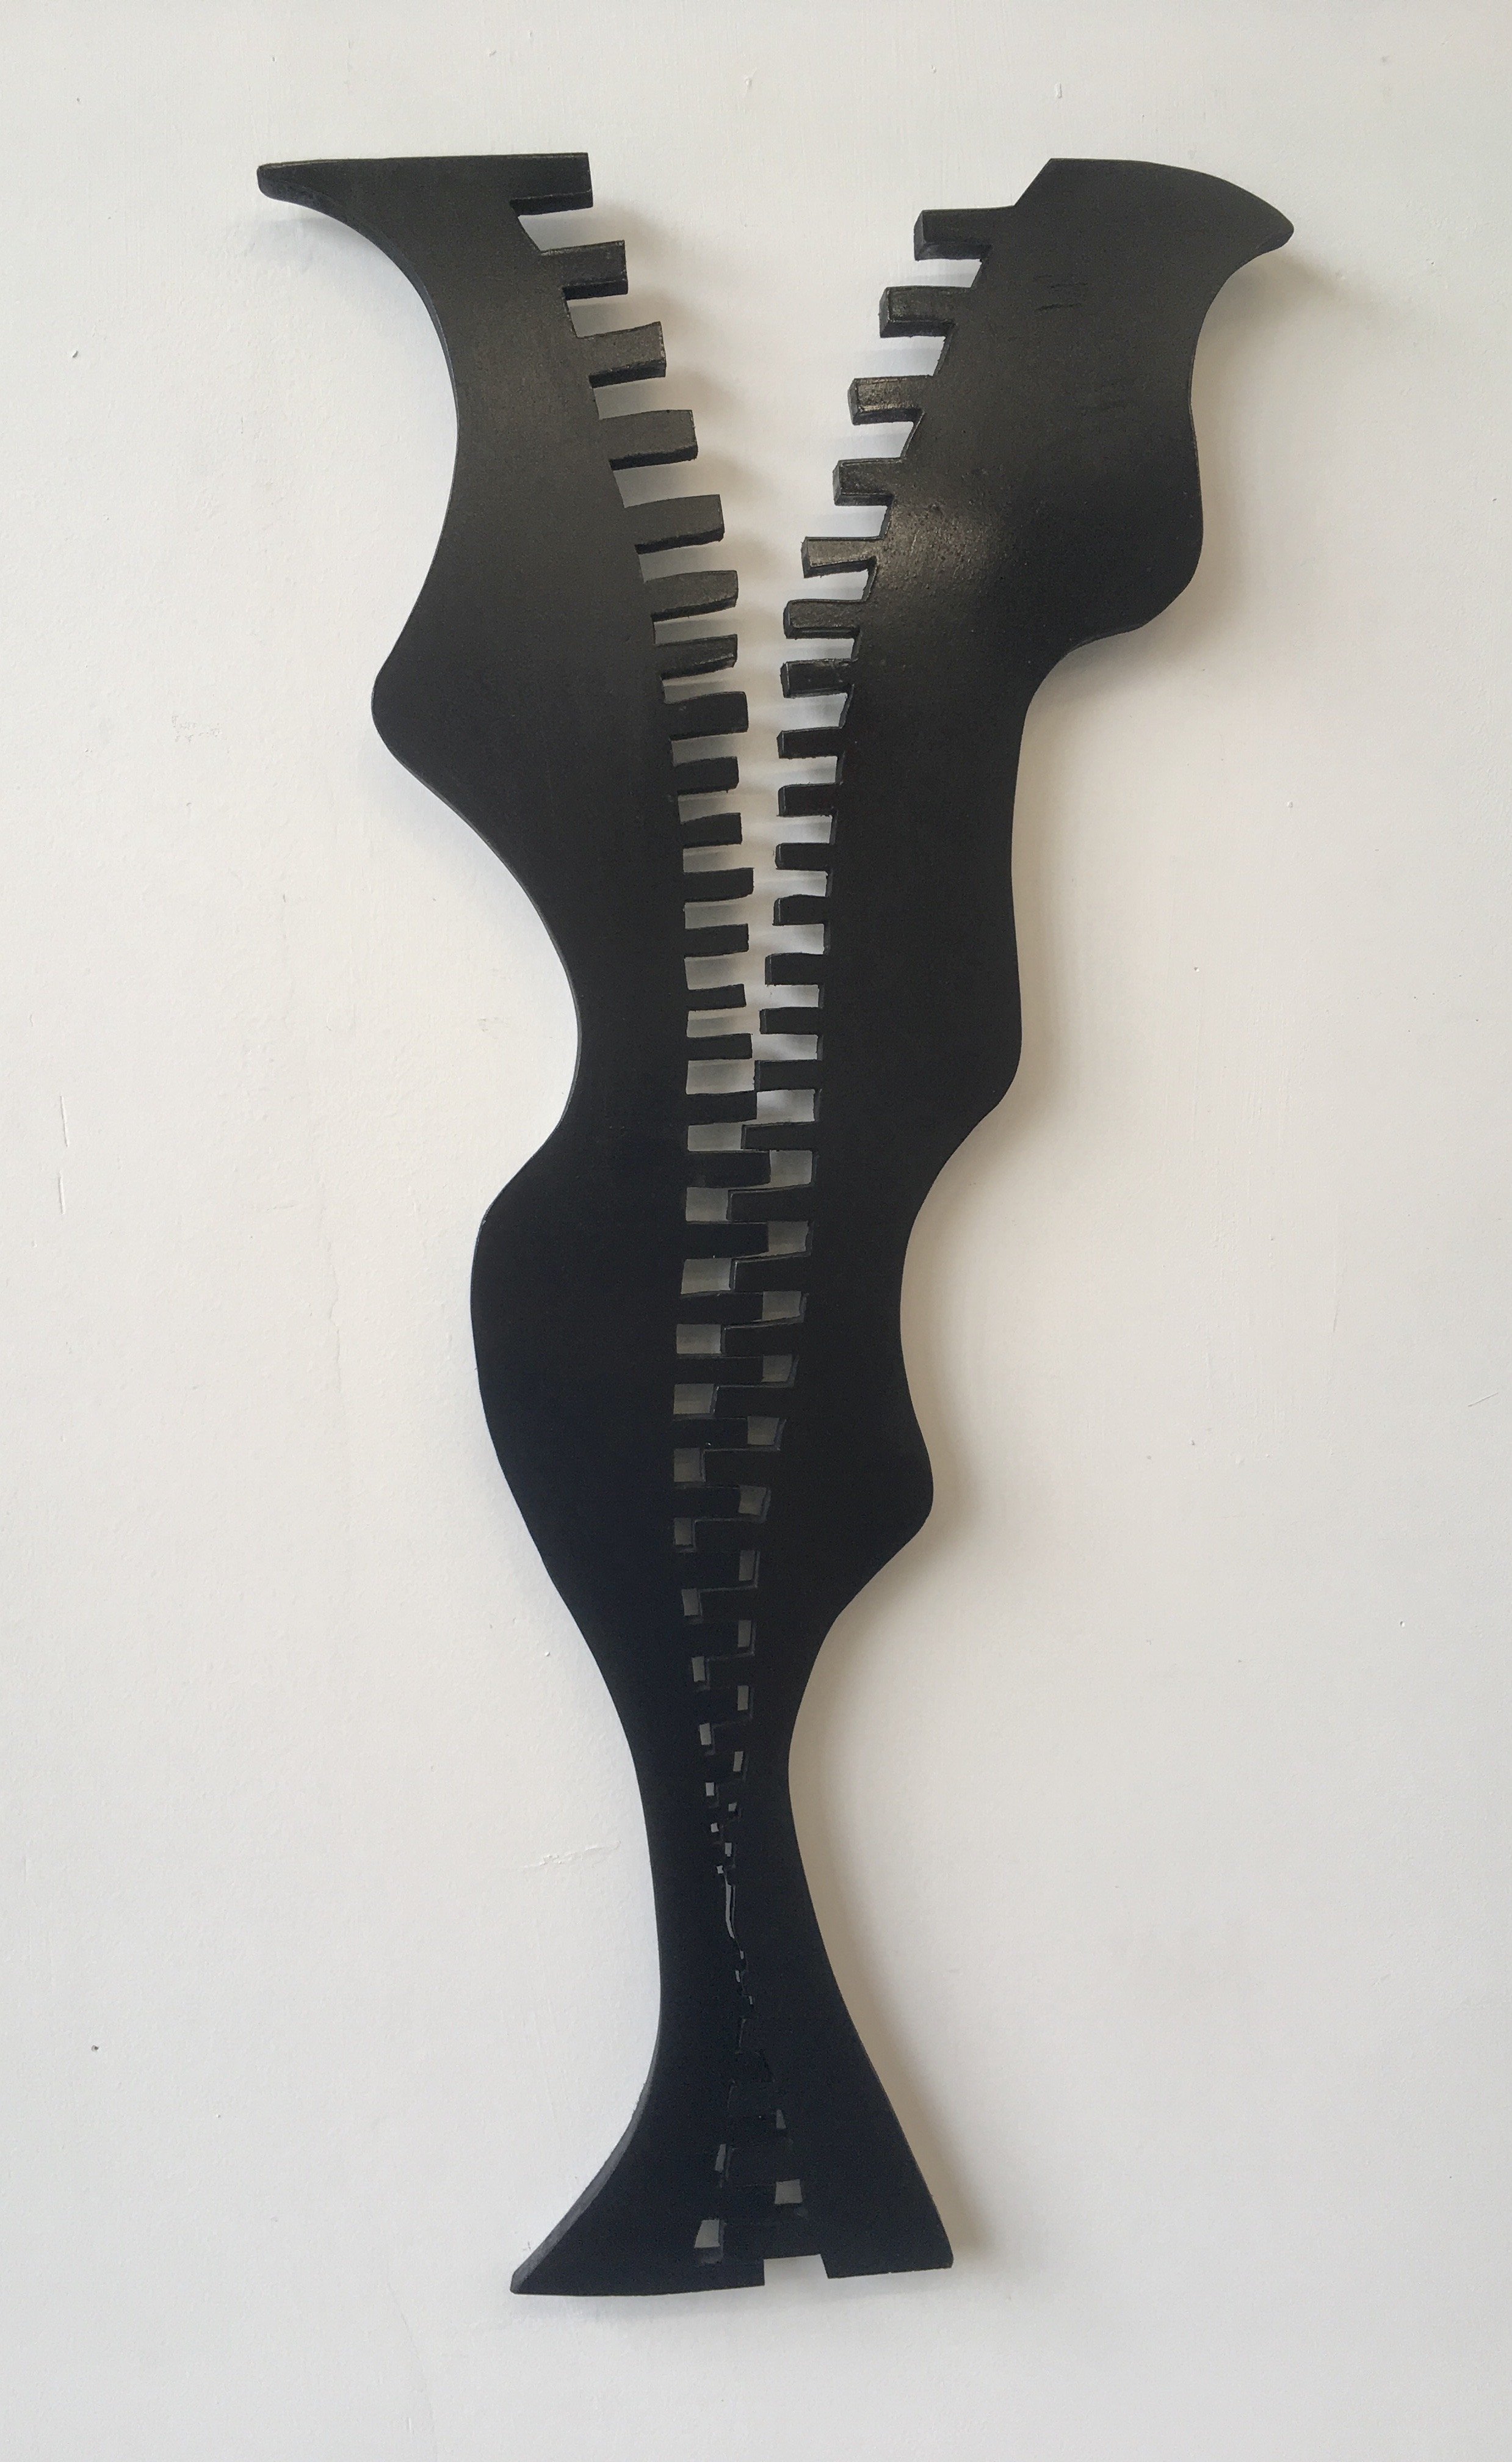  Black Dress, 2018, acrylic on shaped pvc 